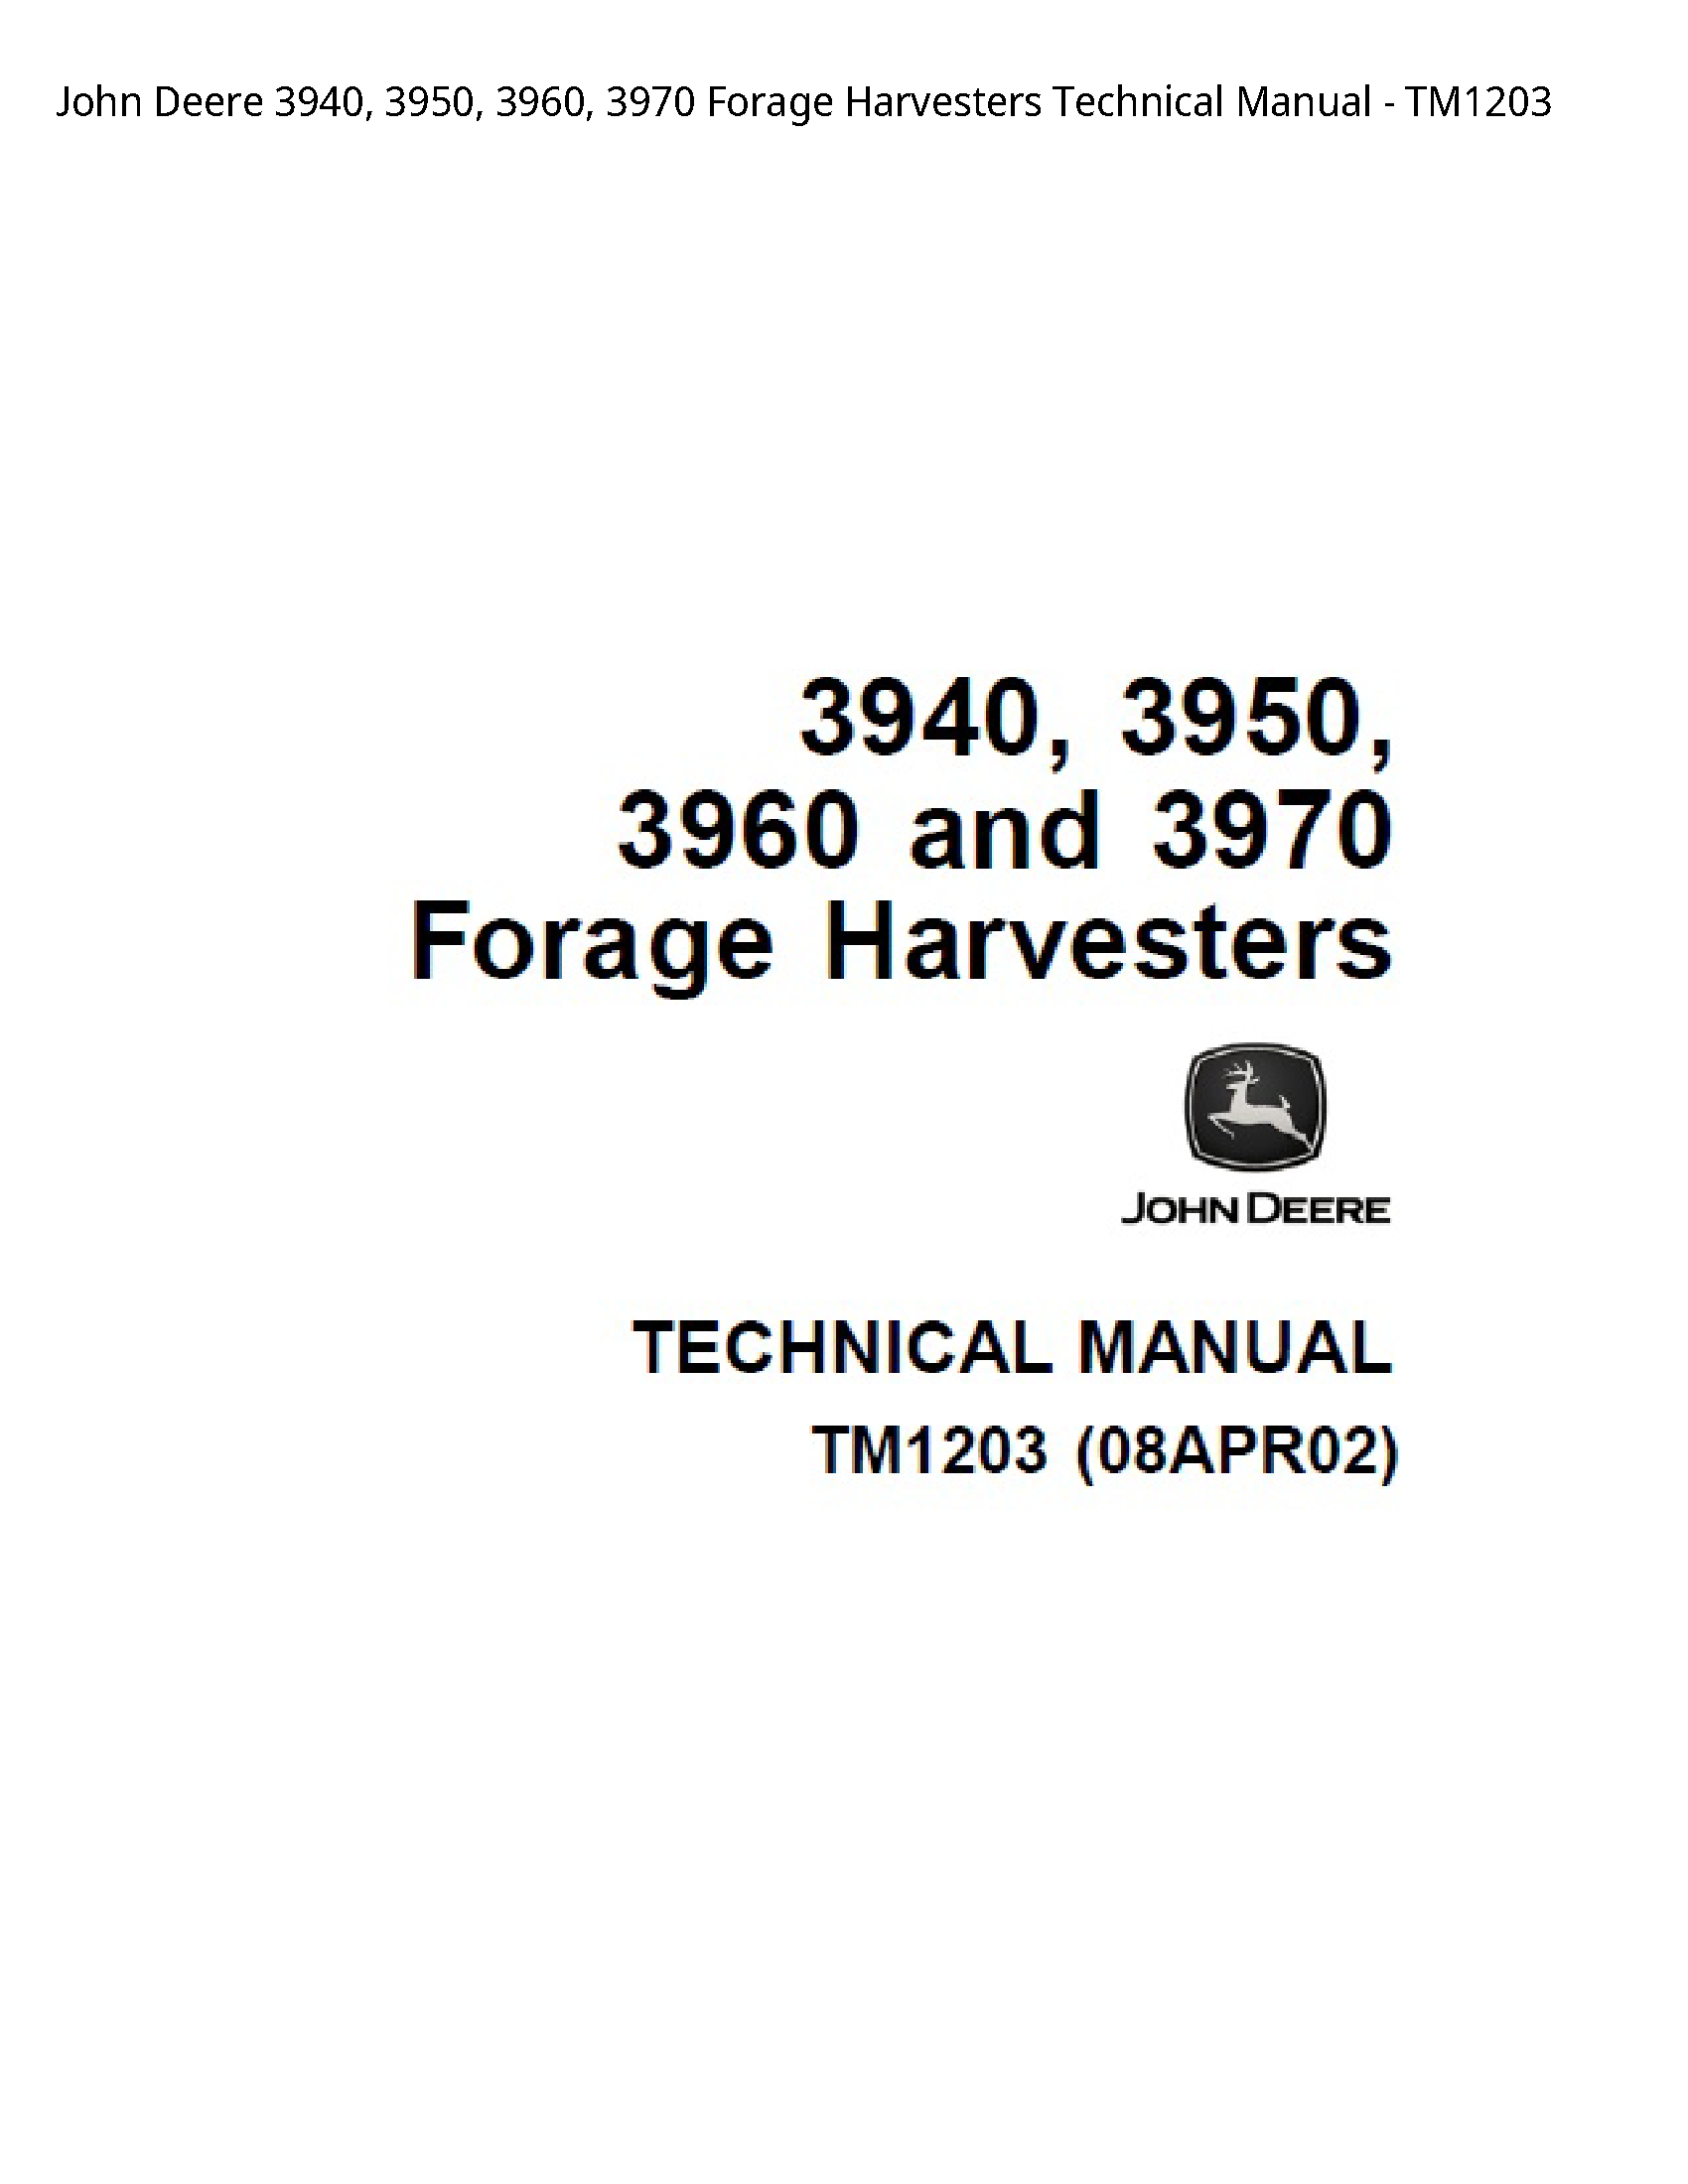 John Deere 3940 Forage Harvesters Technical manual